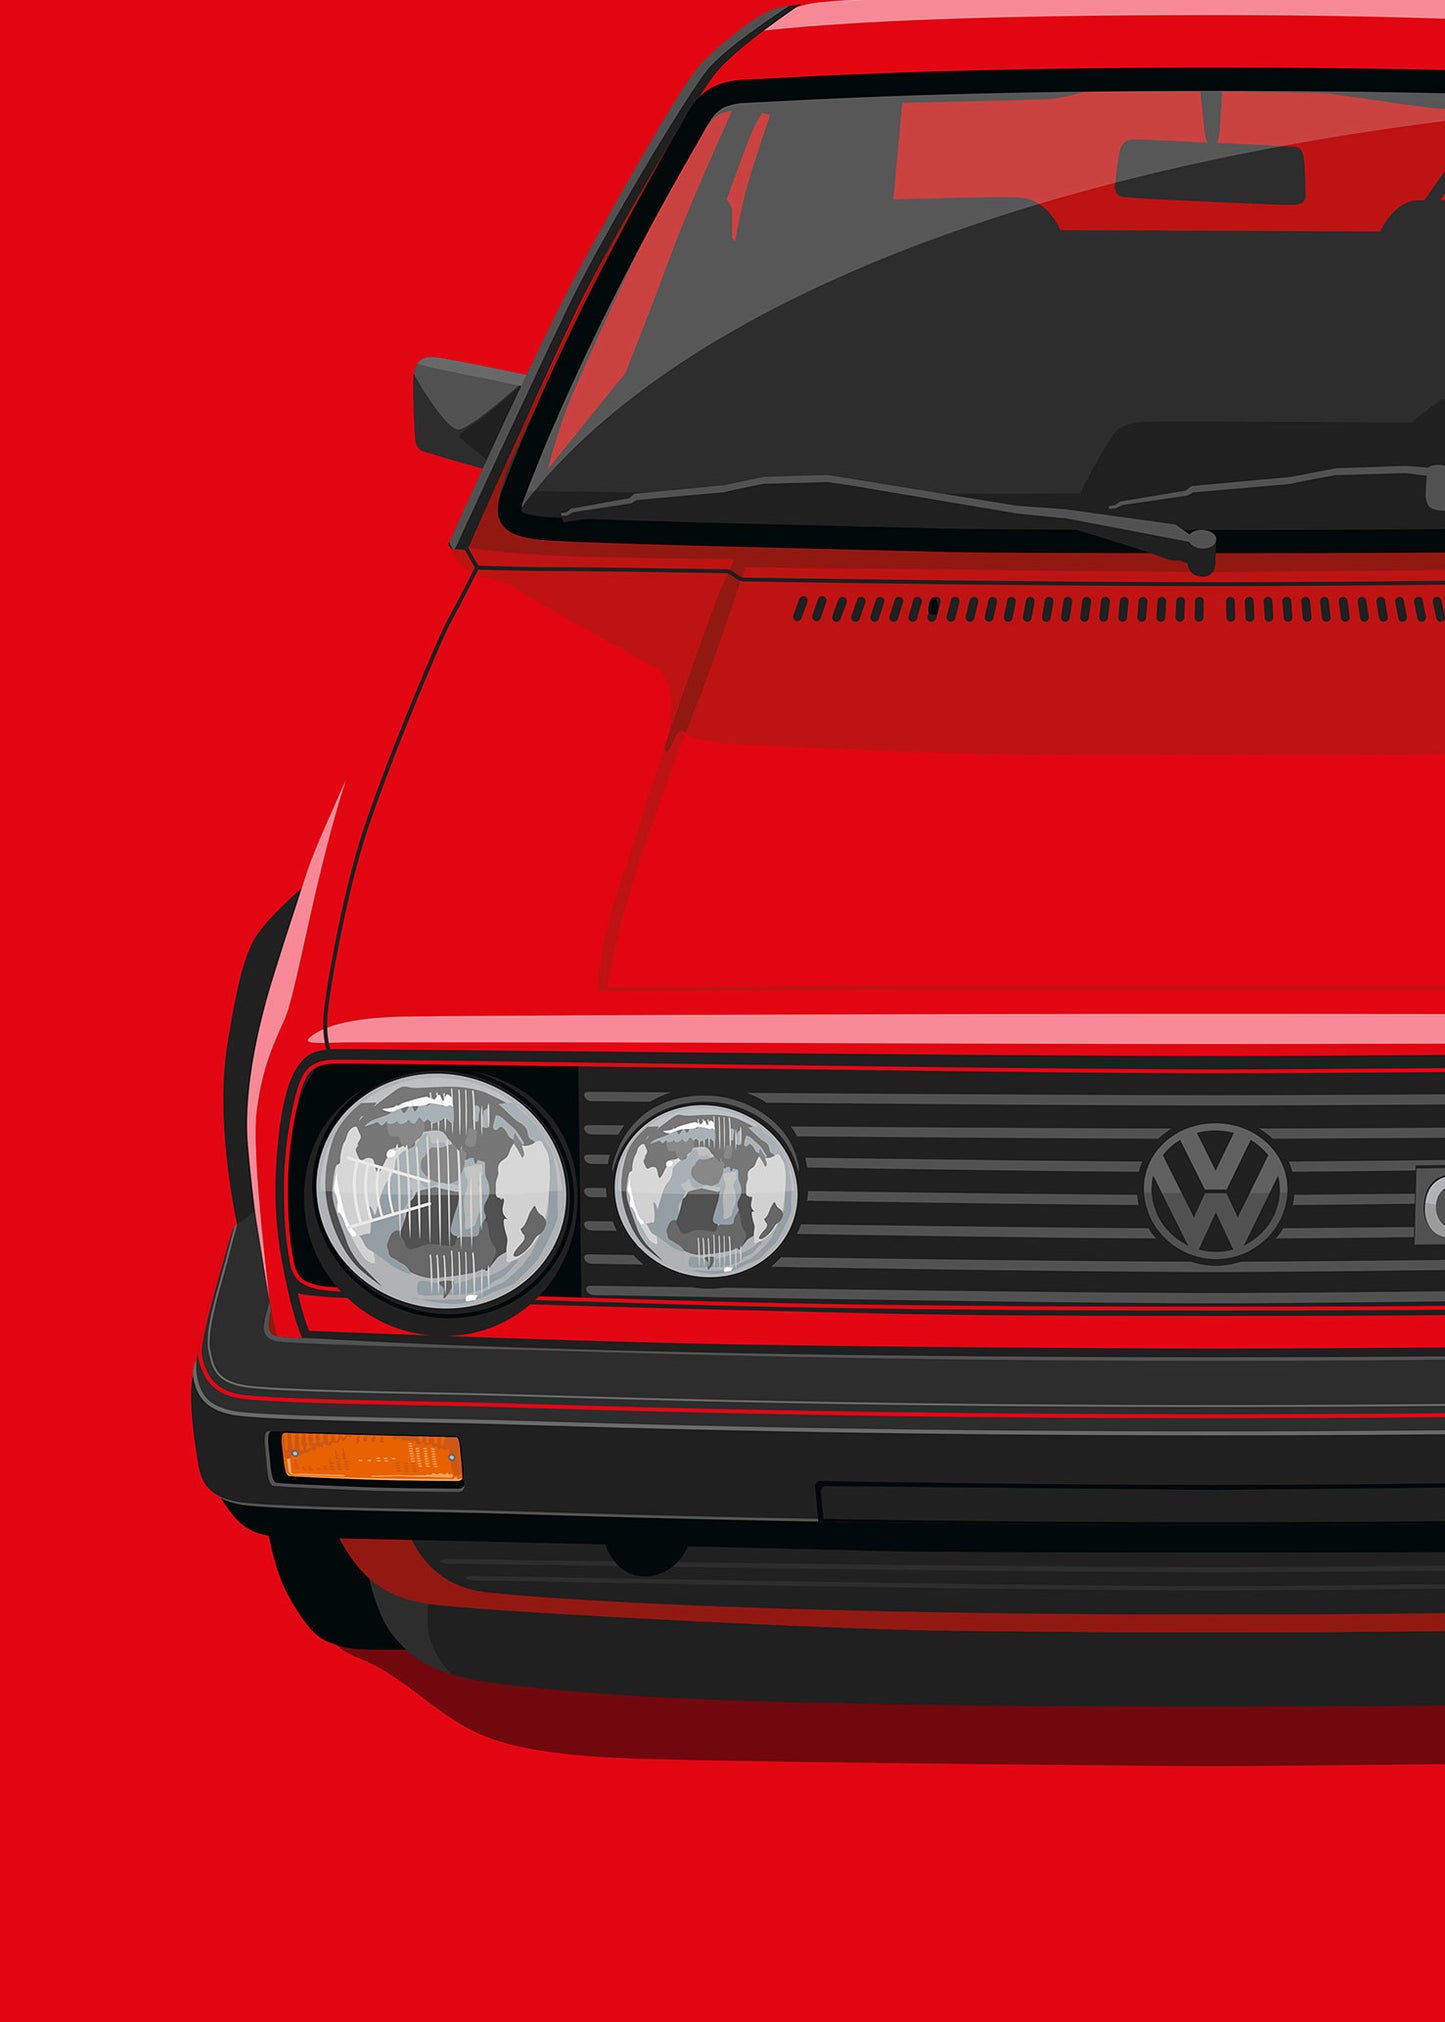 1984 Volkswagen Golf GTI (Mk2) - Mars Red - poster print